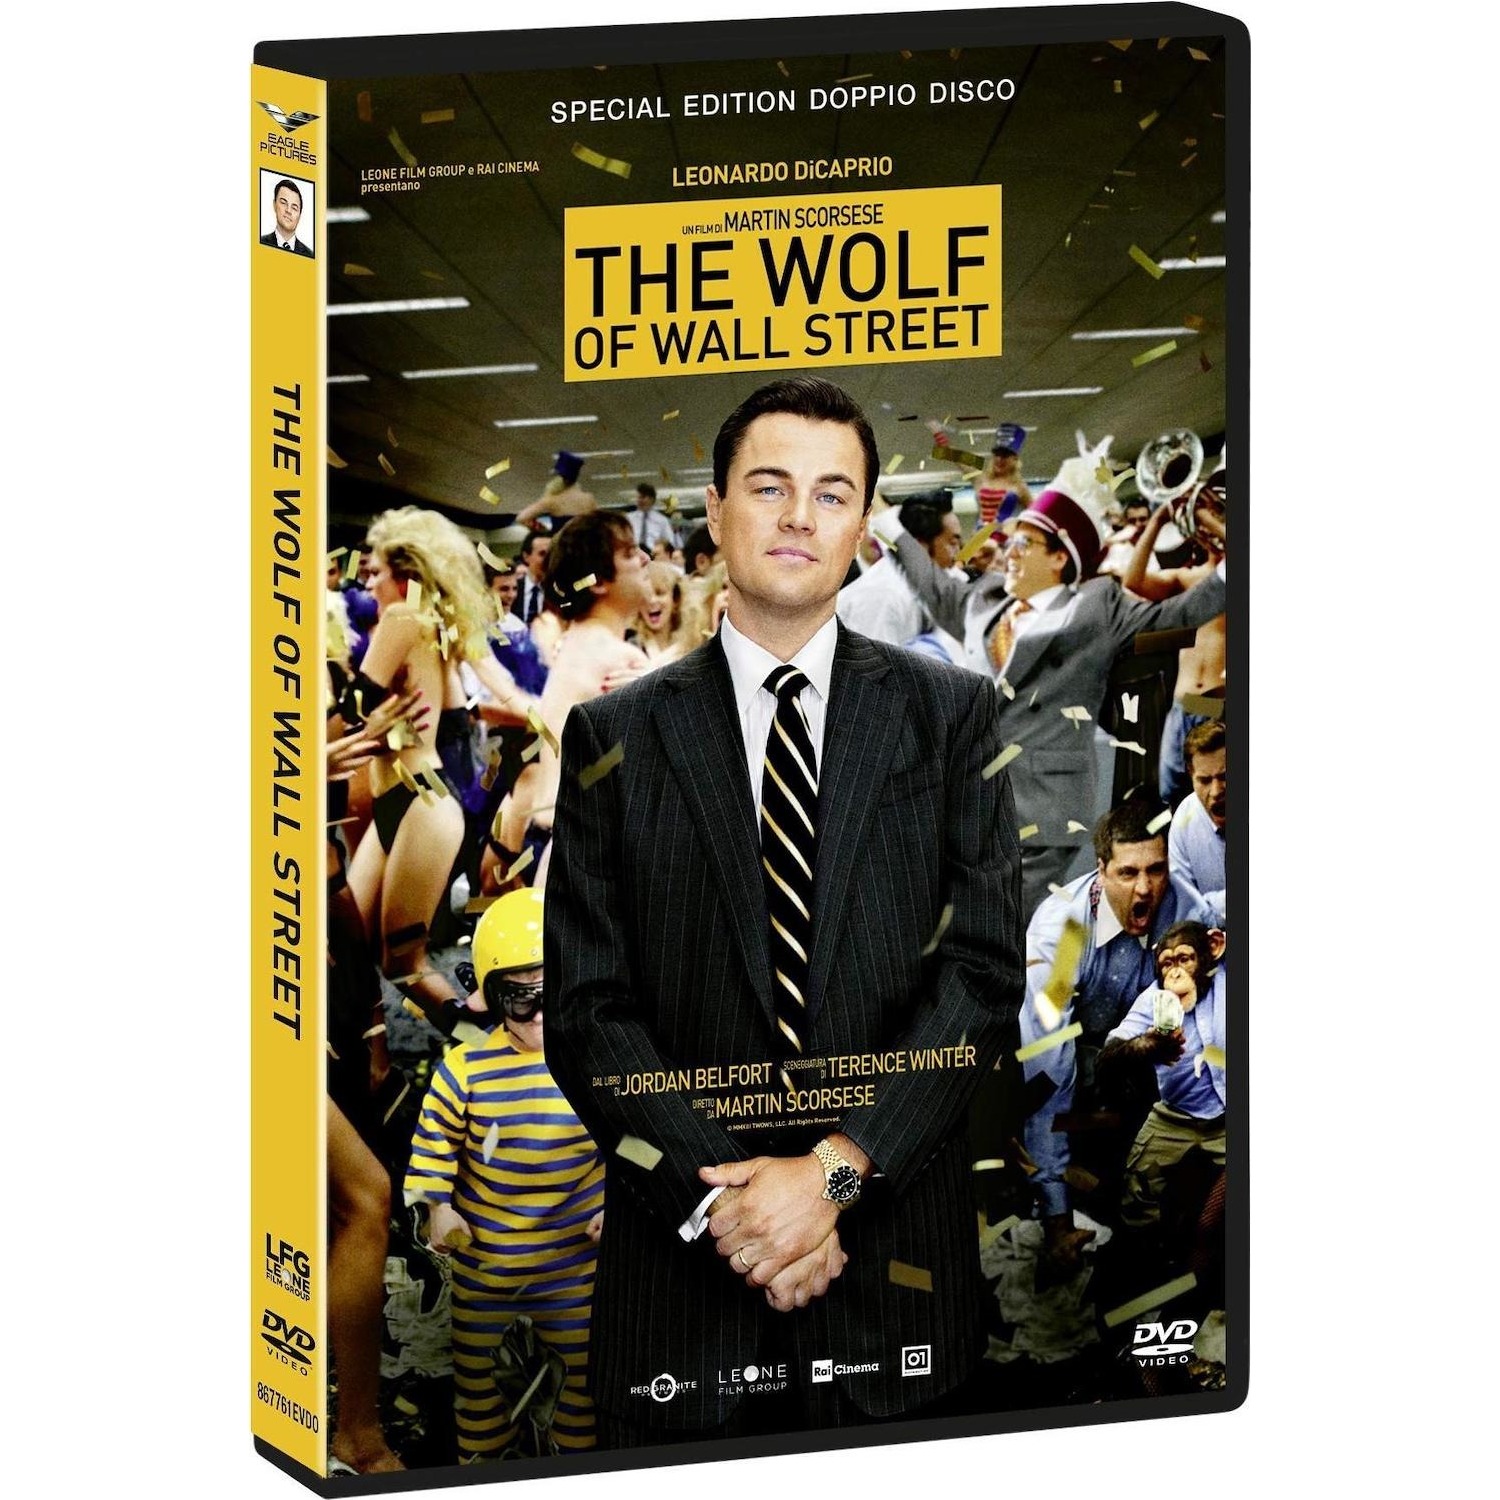 Immagine per DVD The Wolf of Wall Street da DIMOStore